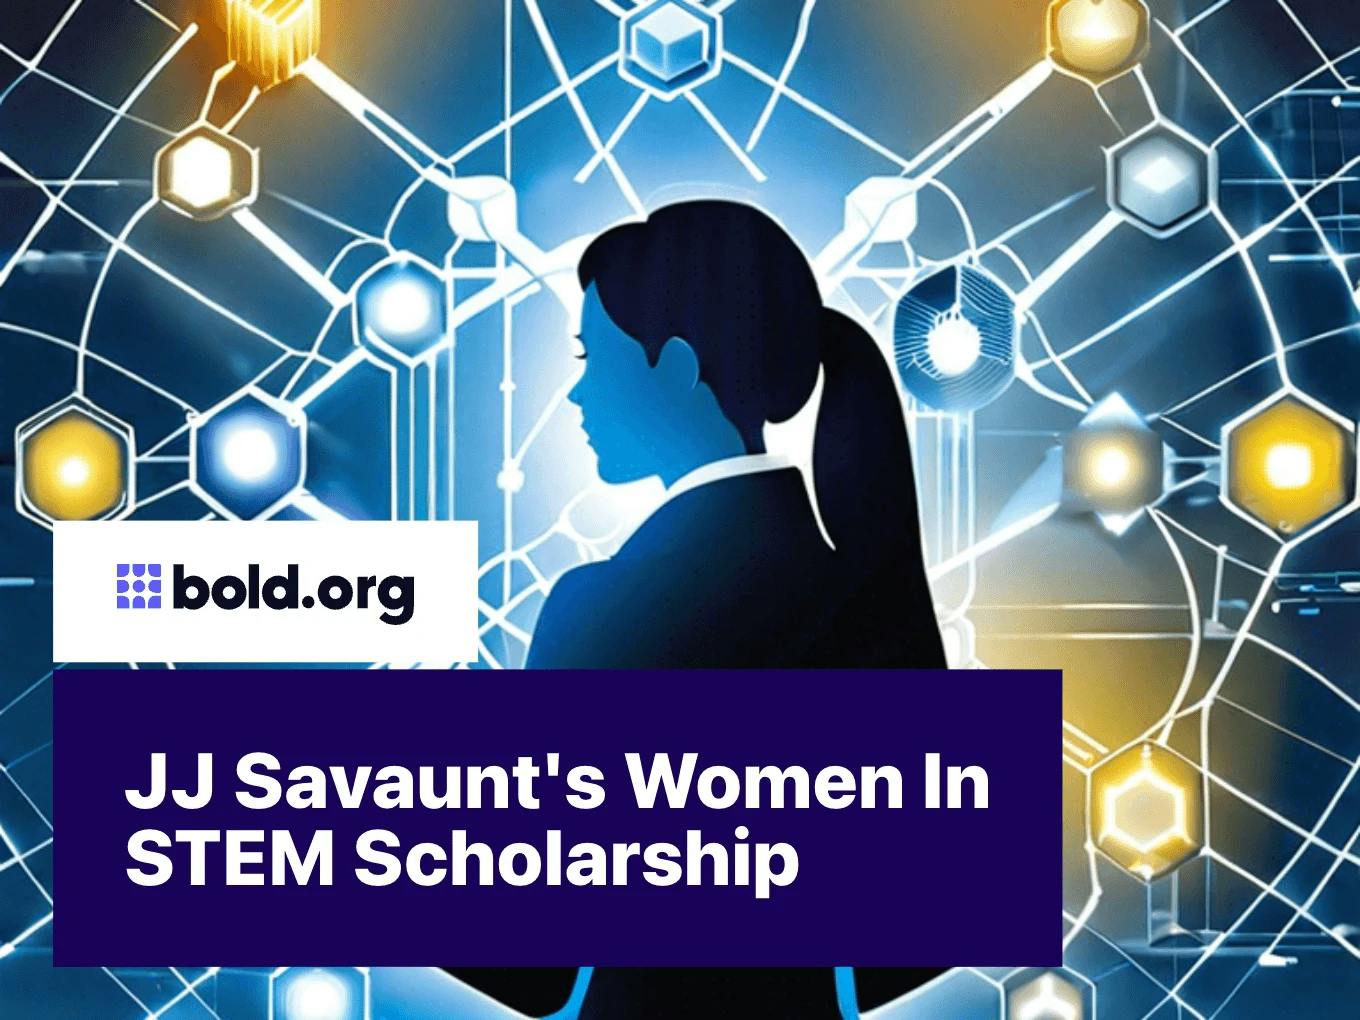 JJ Savaunt's Women In STEM Scholarship